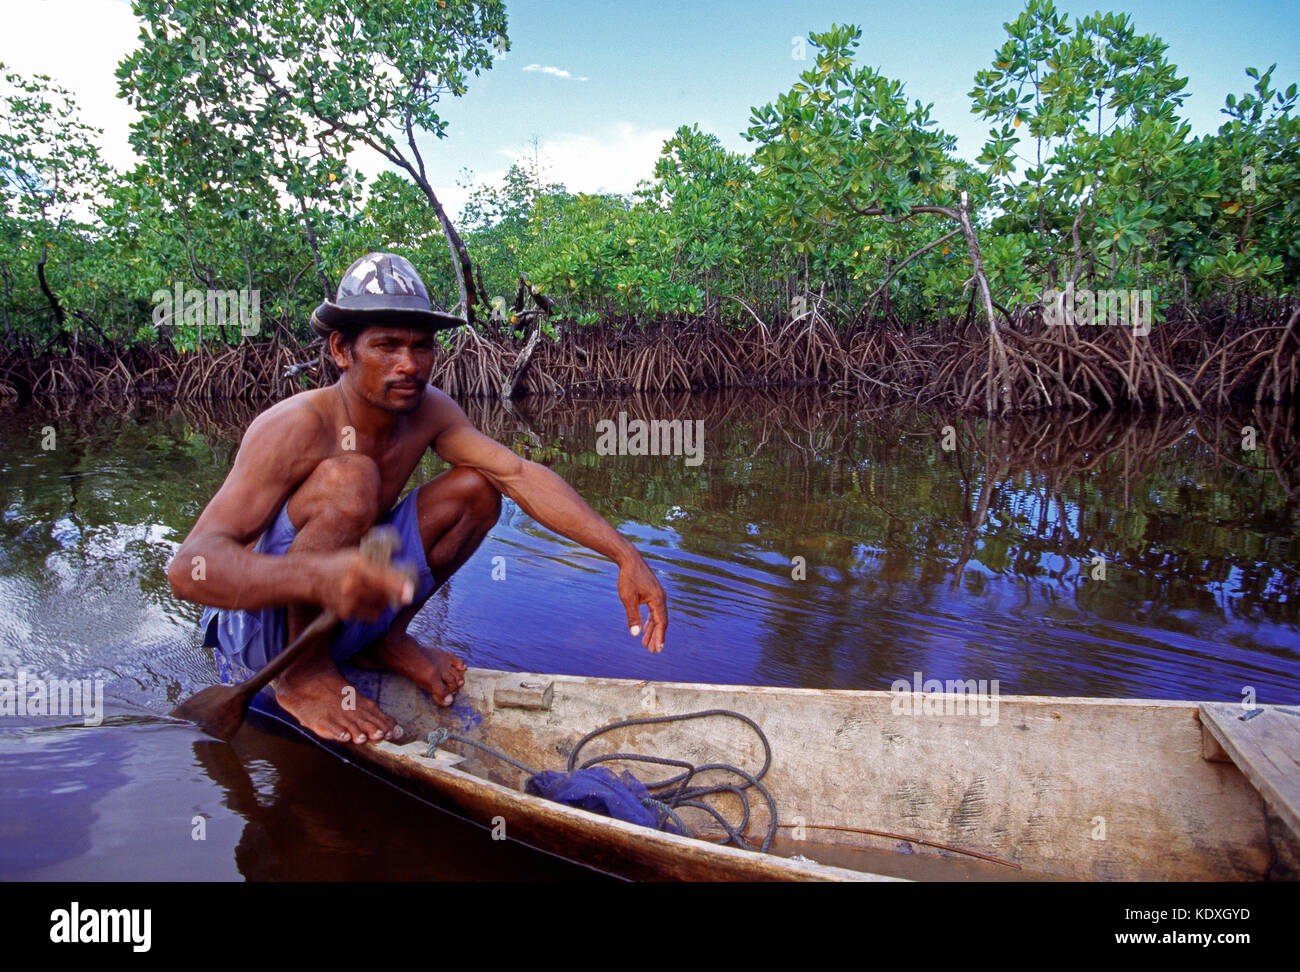 Indonesia. Sulawesi. Sama-Bajau people. Man in canoe paddling by mangroves. Stock Photo